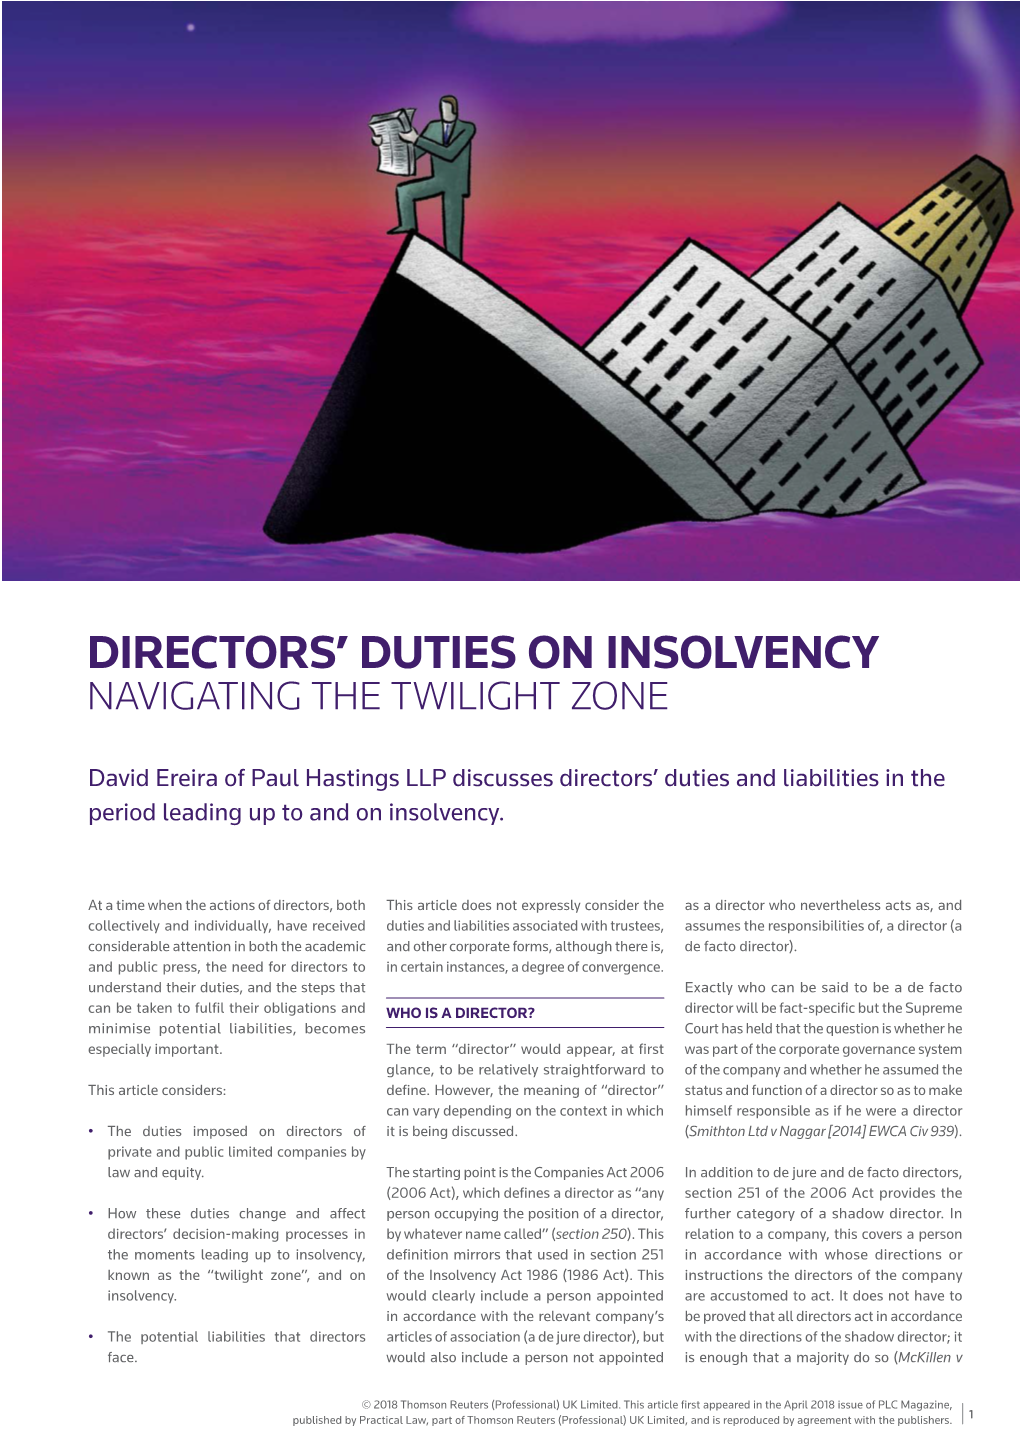 Directors' Duties on Insolvency